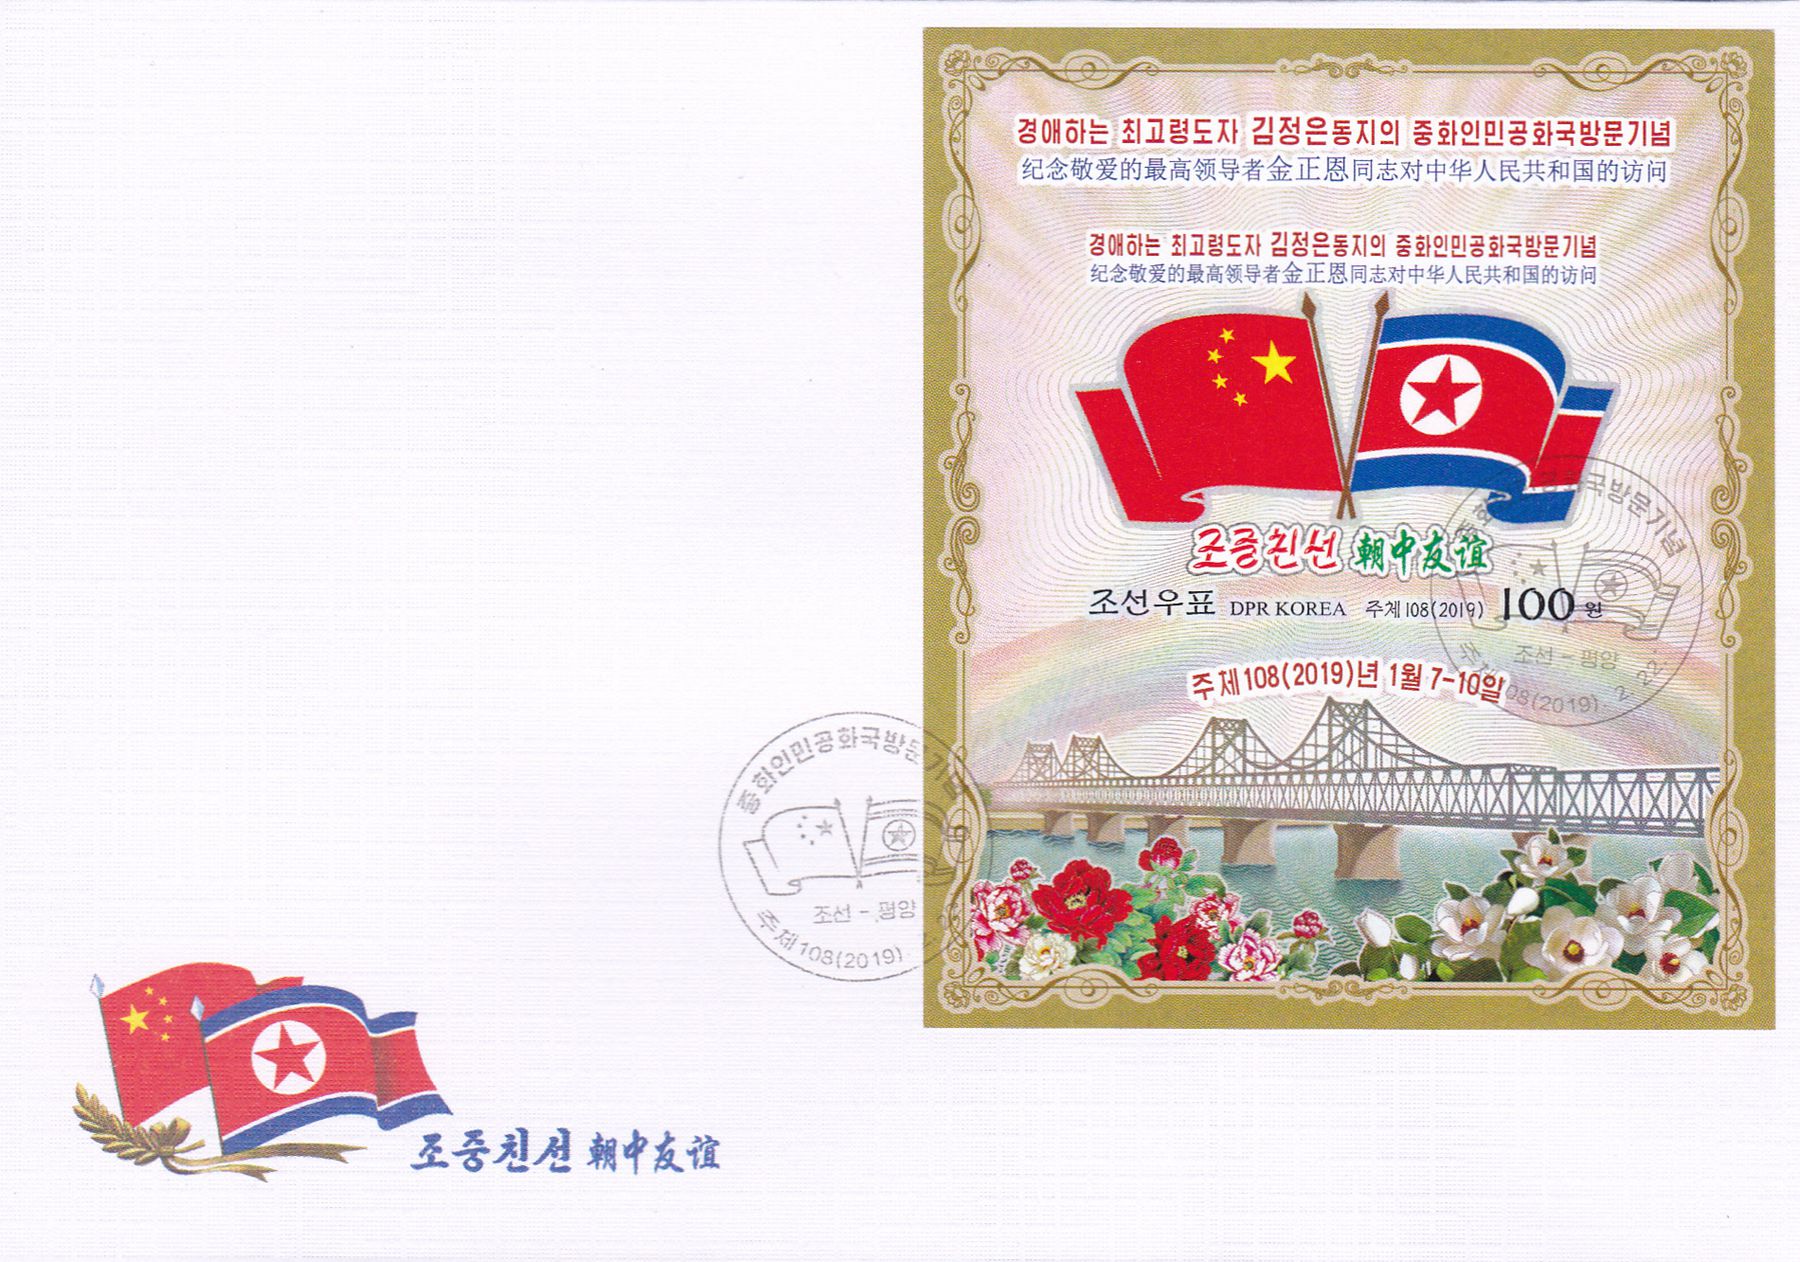 L9788, Korea "Leader Kim Visit China" SS Stamp FDC, 2019 Imperforate